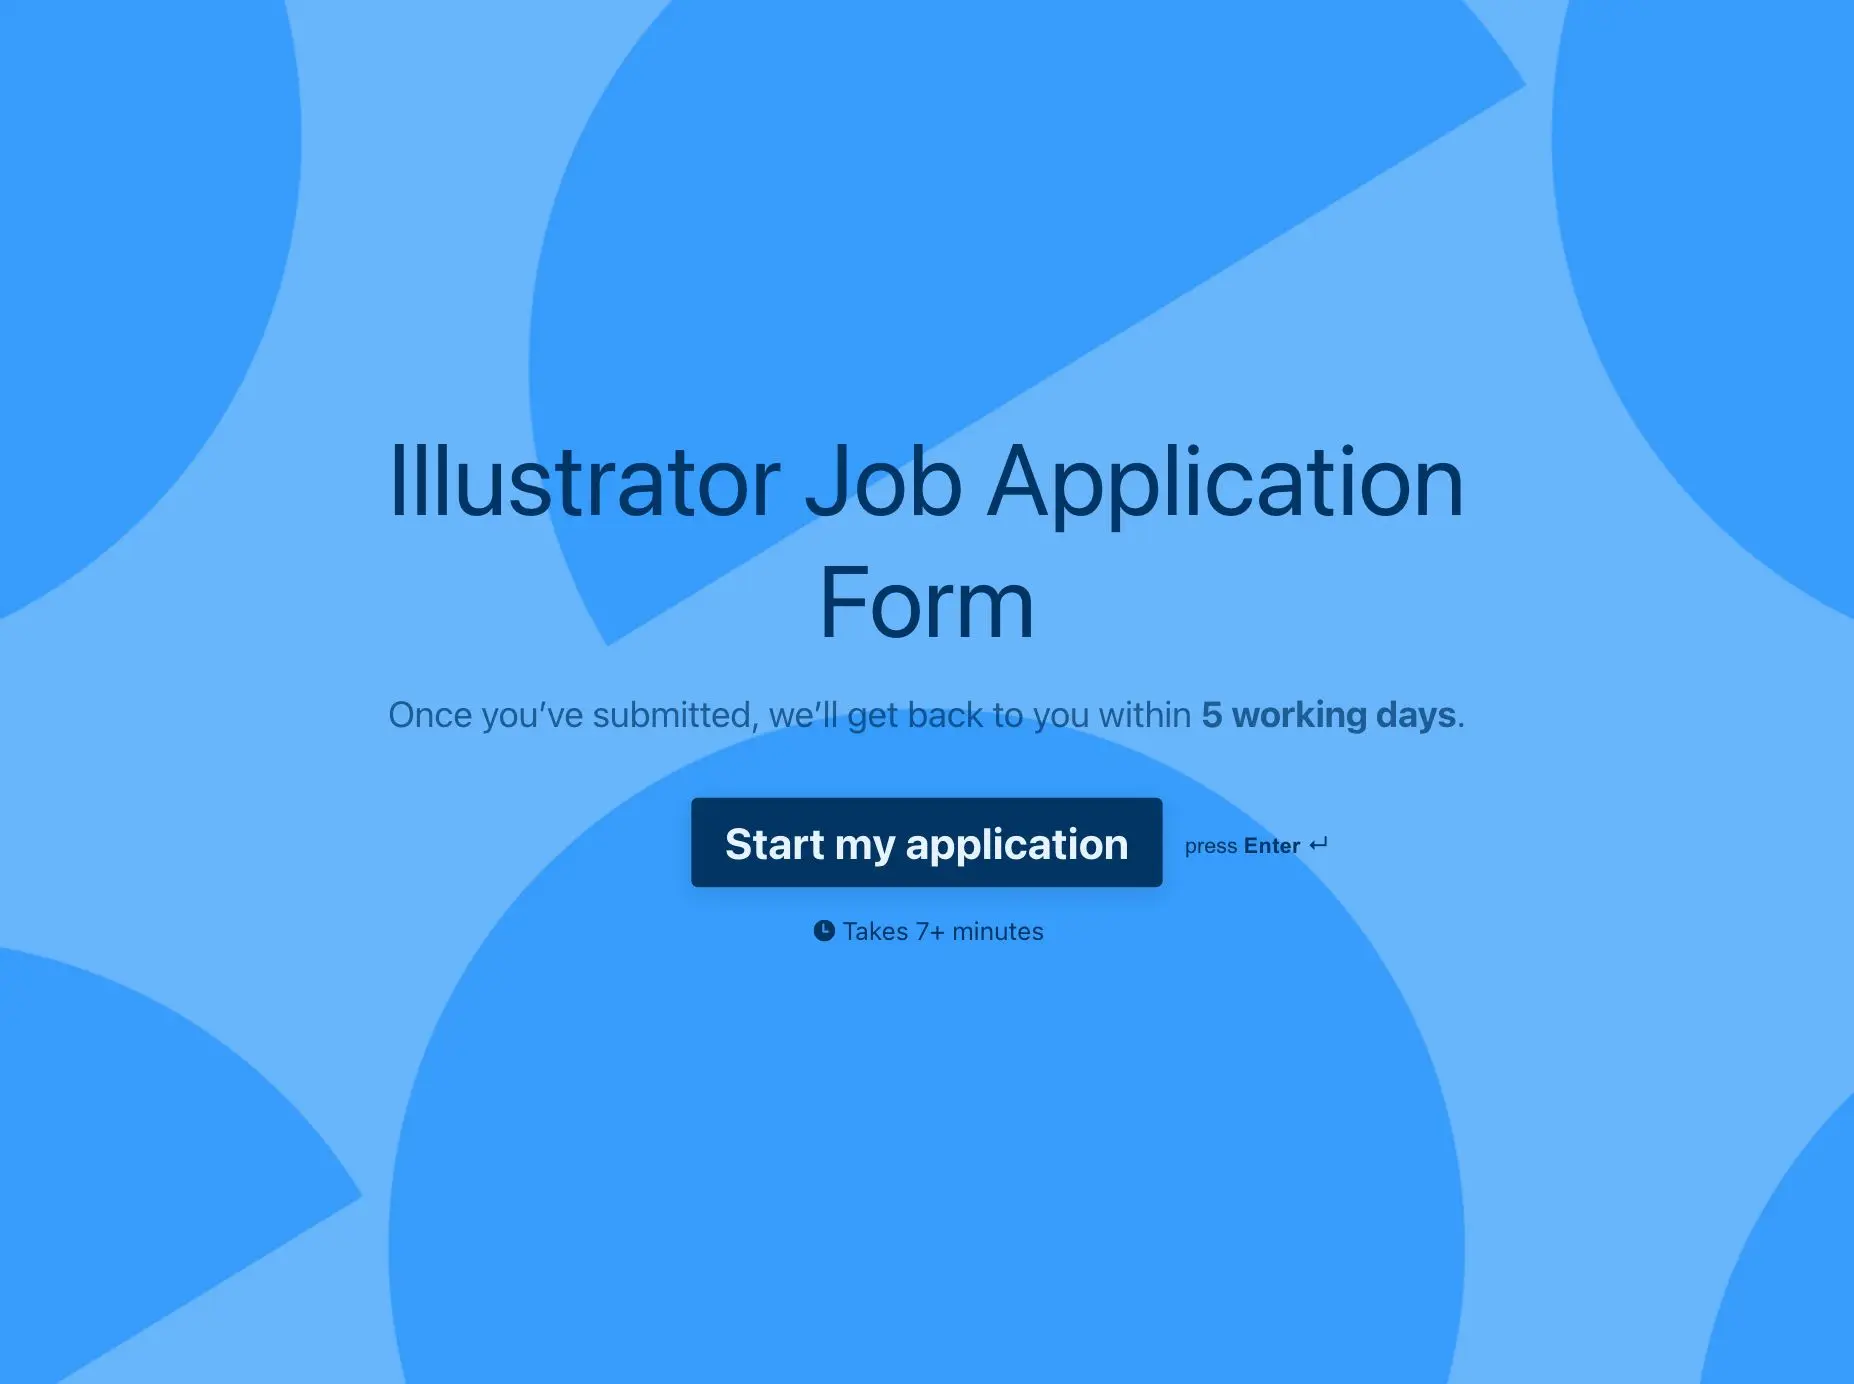 Illustrator Job Application Form Template Hero